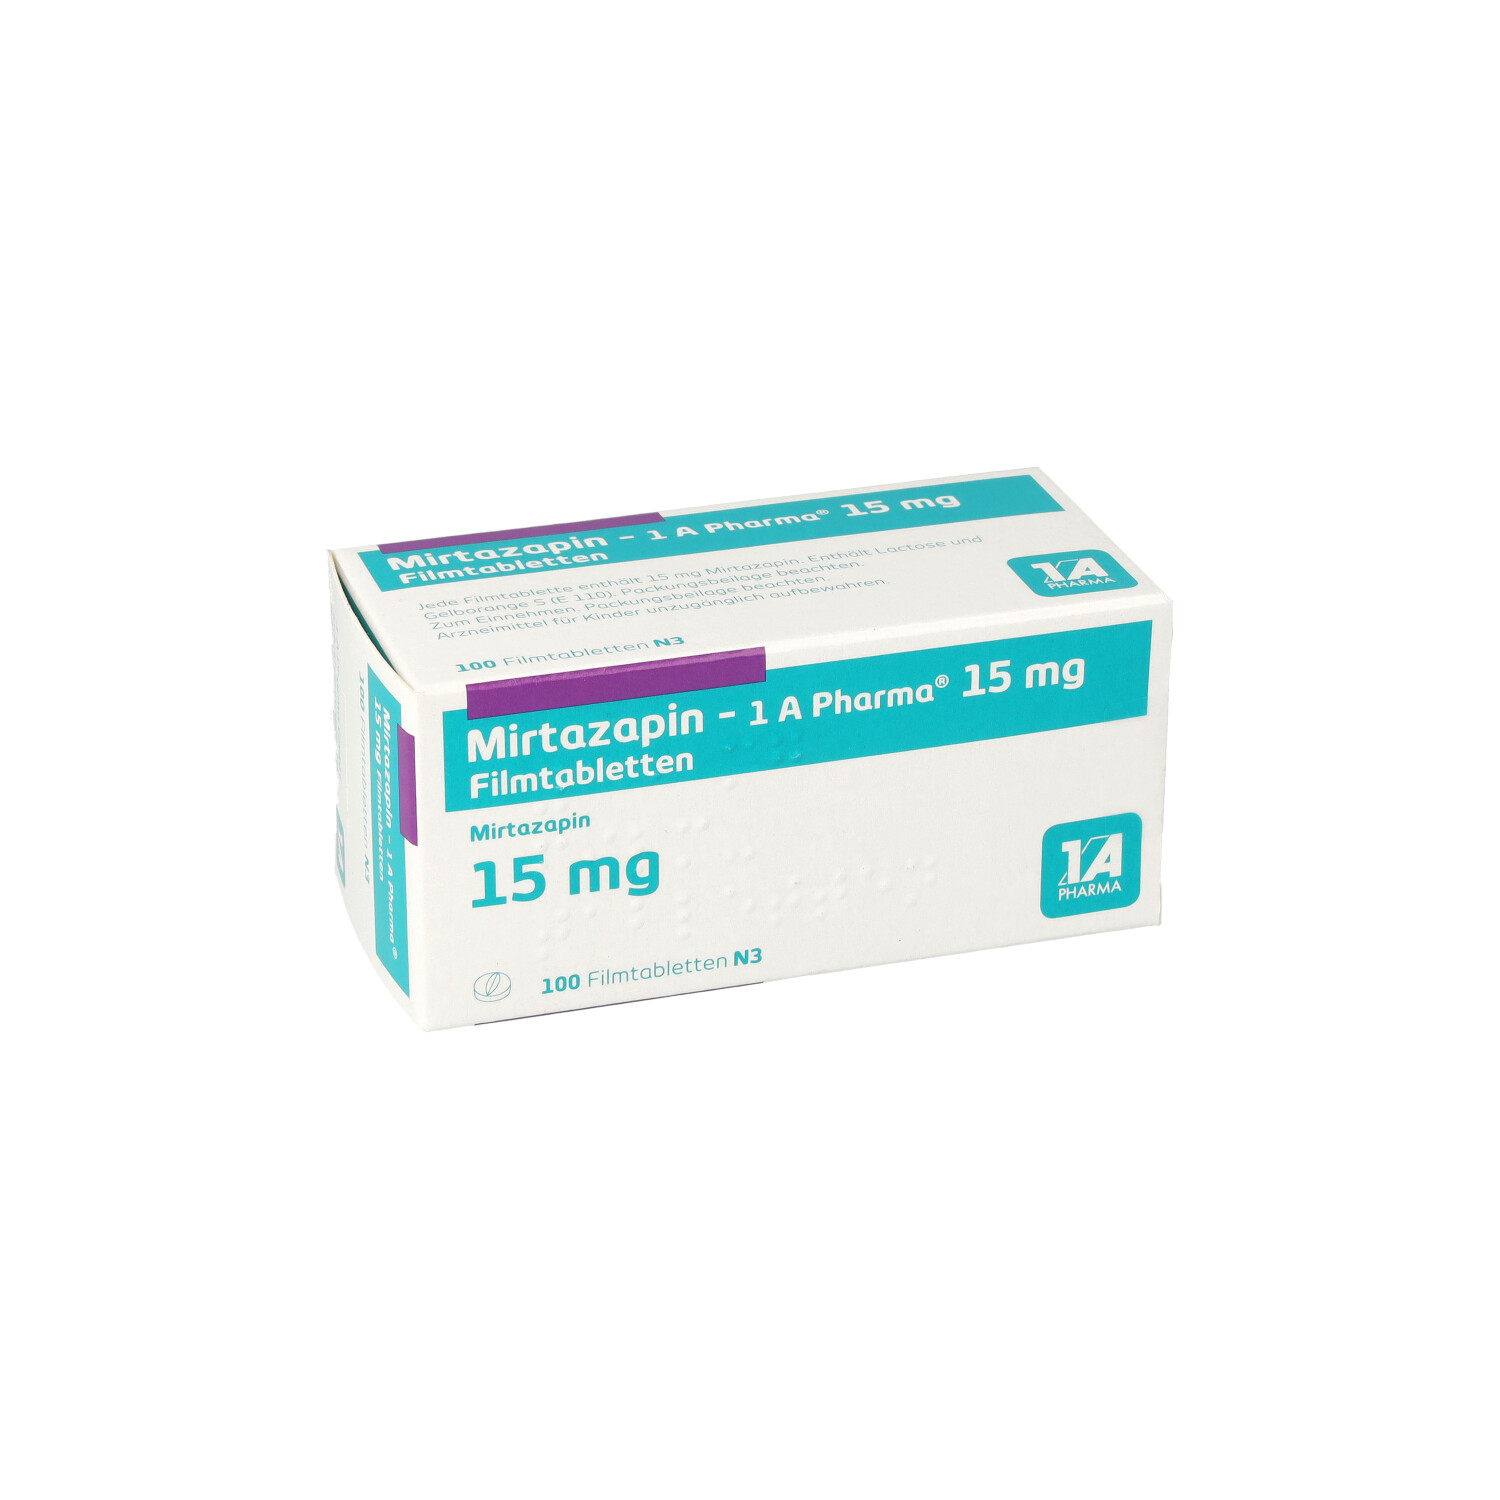 MIRTAZAPIN-1A Pharma 15 mg Filmtabletten